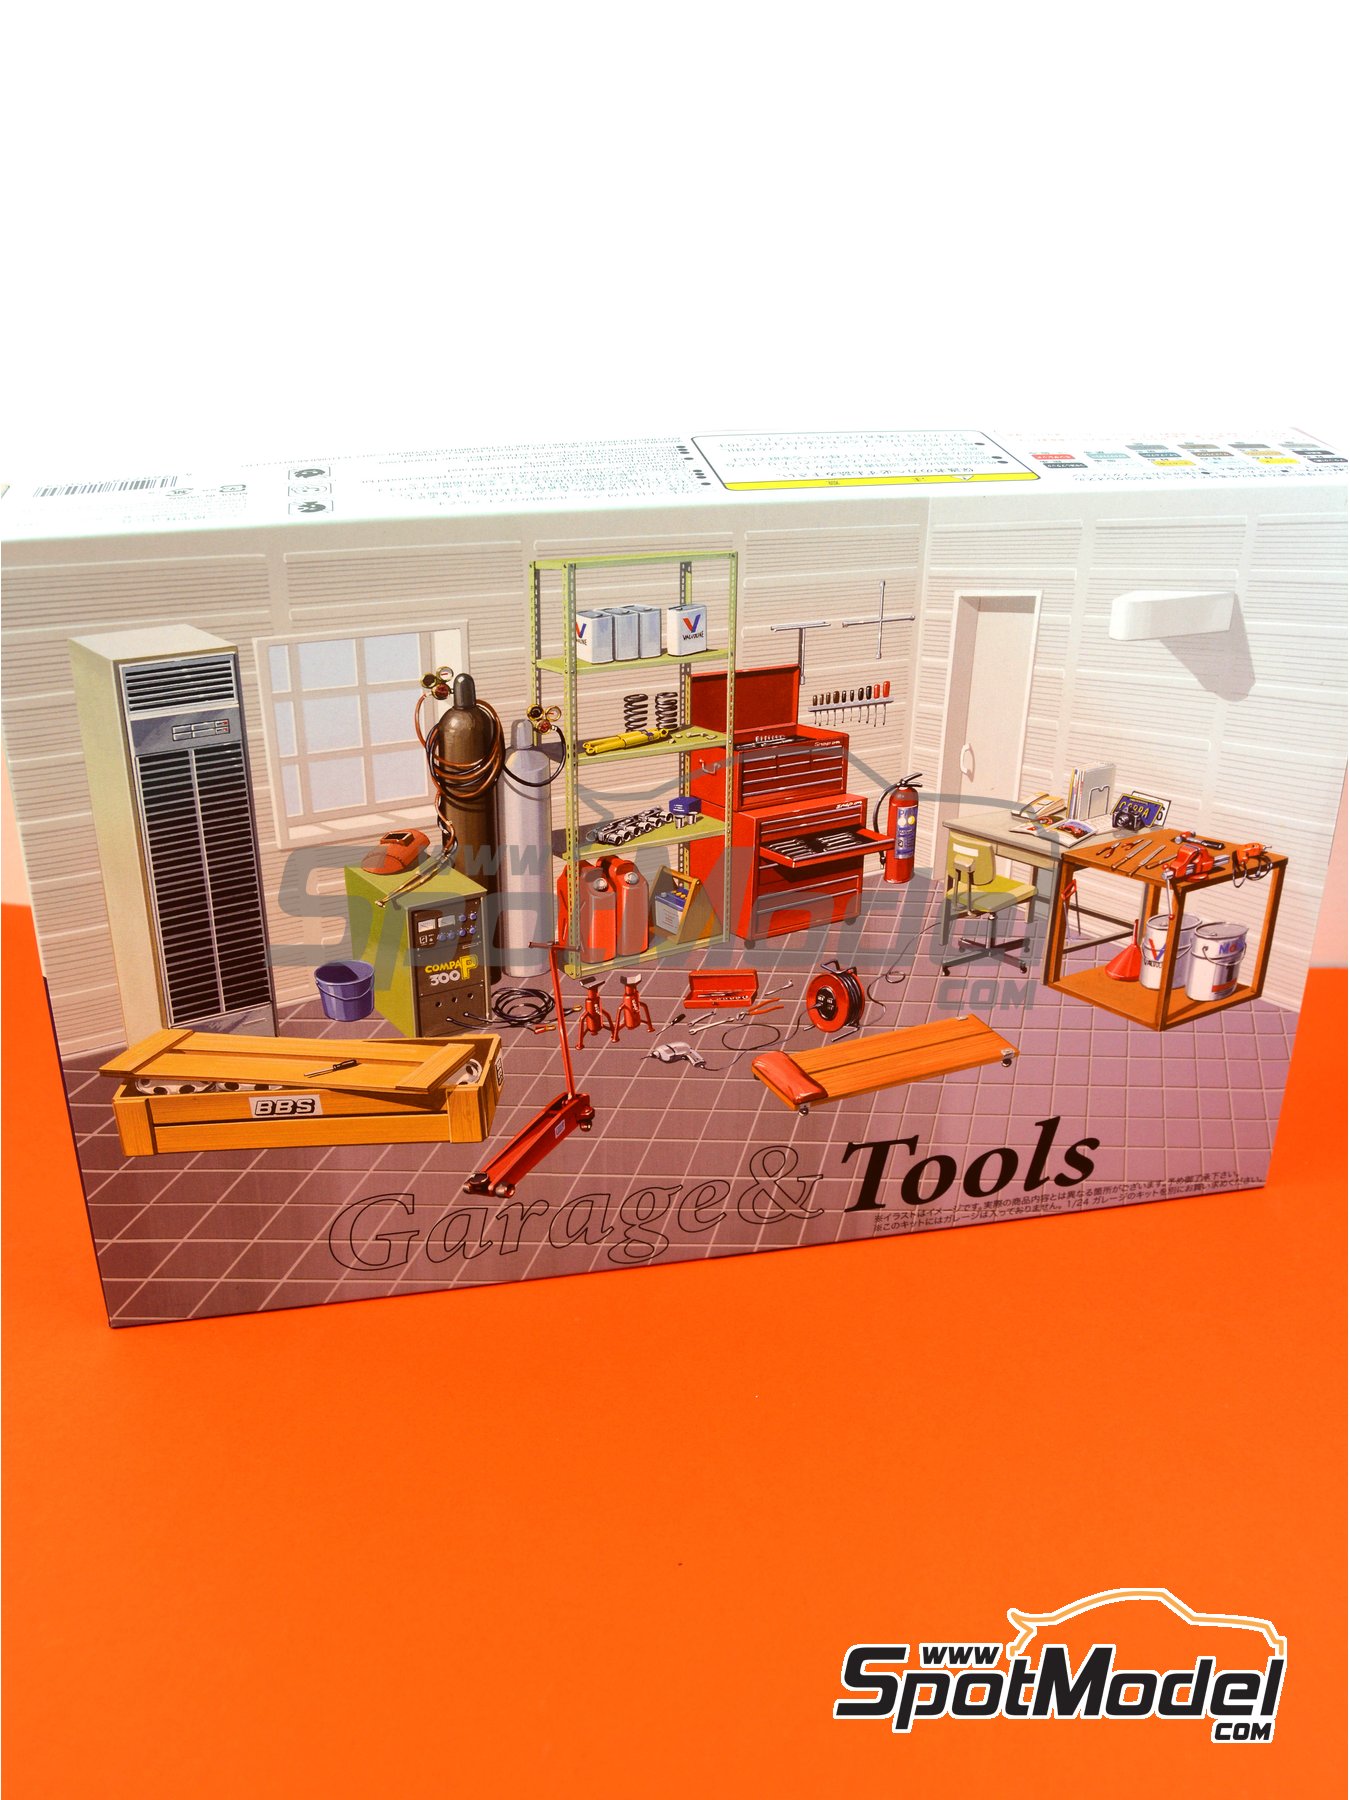 Fujimi 115054: Scale model kit 1/24 scale - Tools (ref. FJ115054